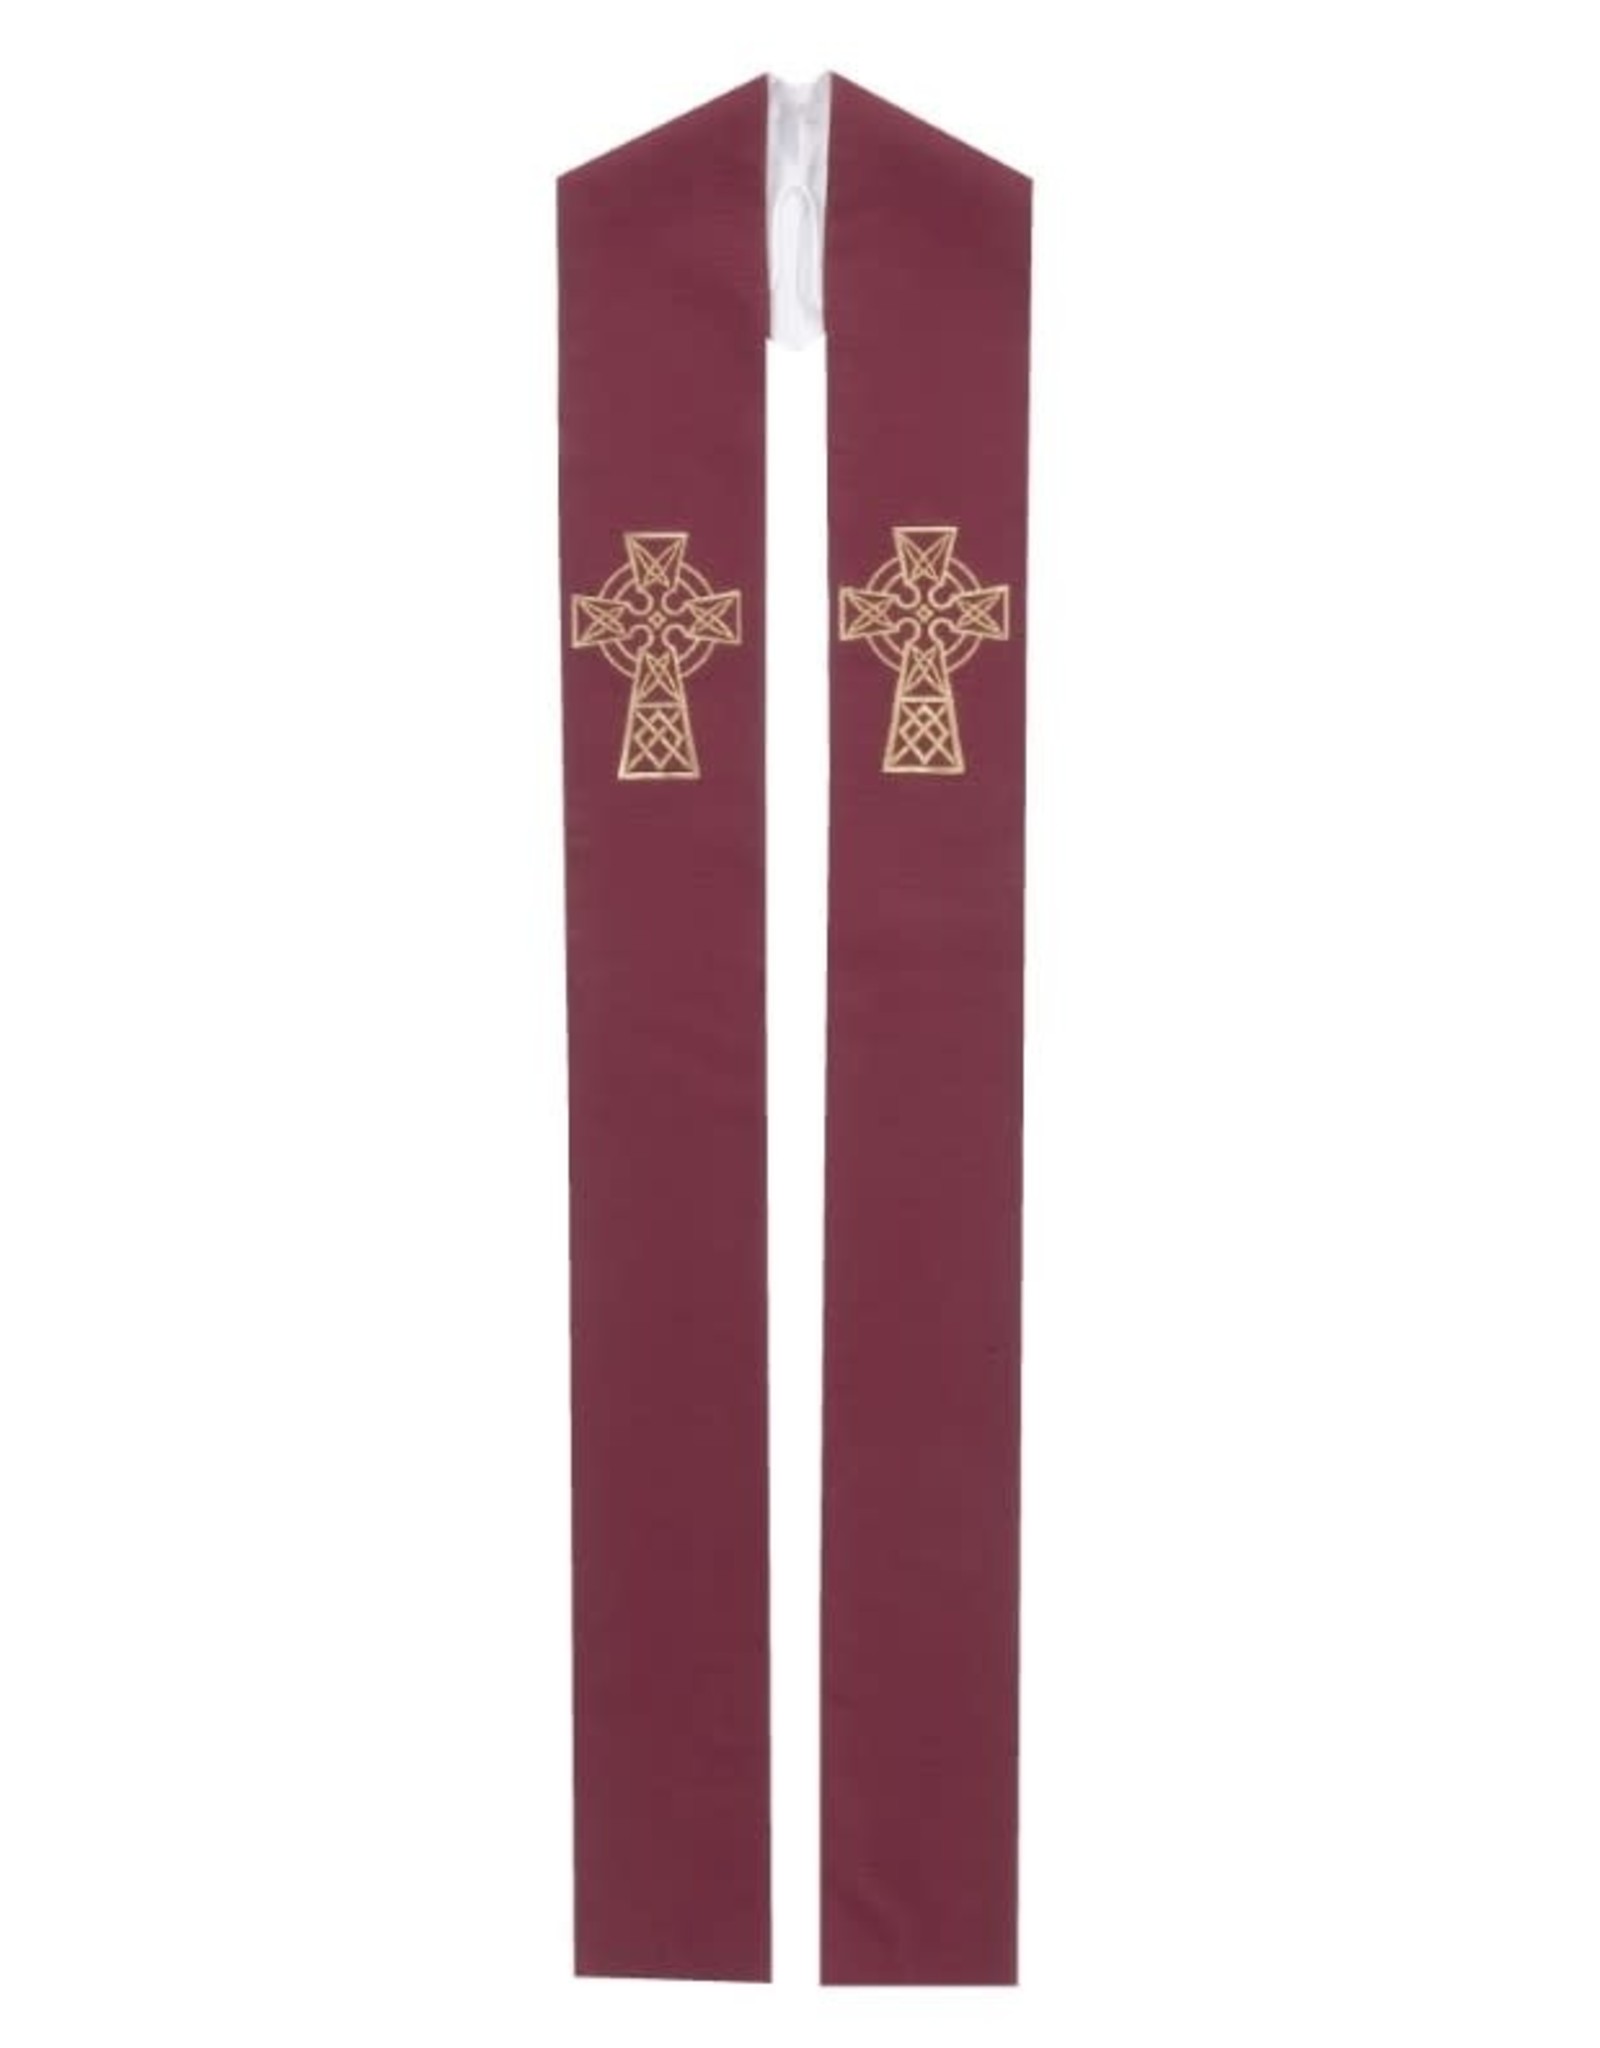 Harbro Stole (Priest) Reversible Celtic Cross -